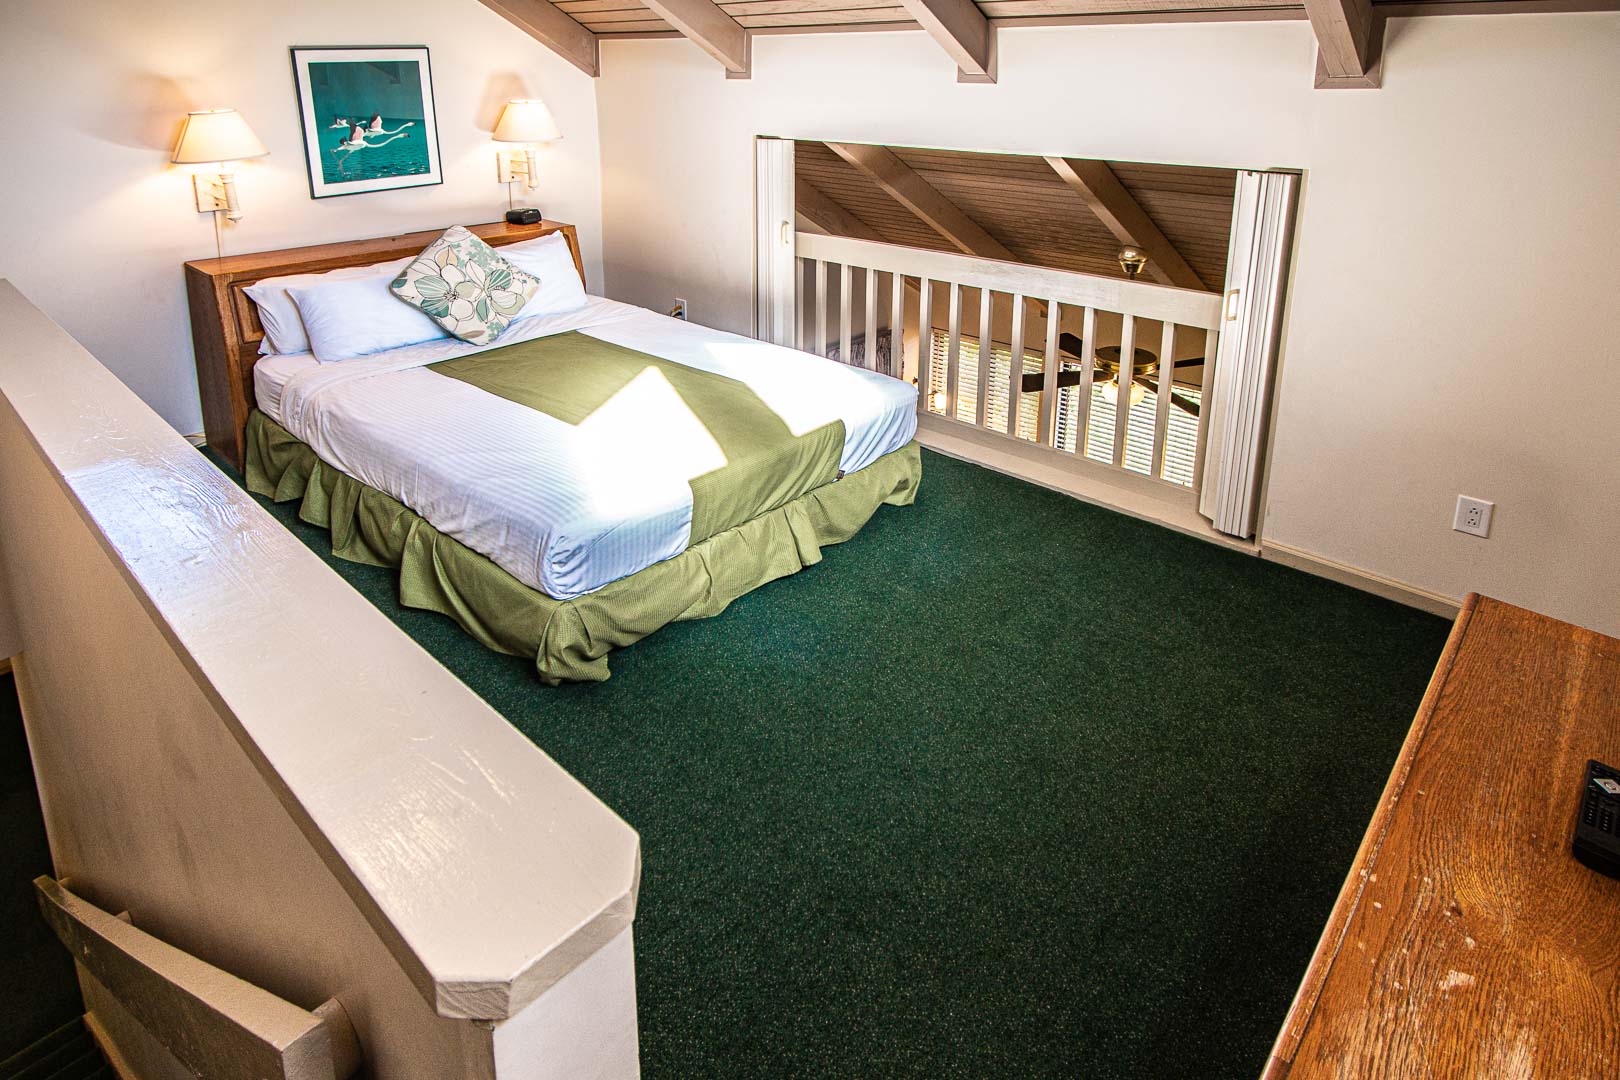 A spacious two bedroom loft at VRI's Sandcastle Cove in New Bern, North Carolina.